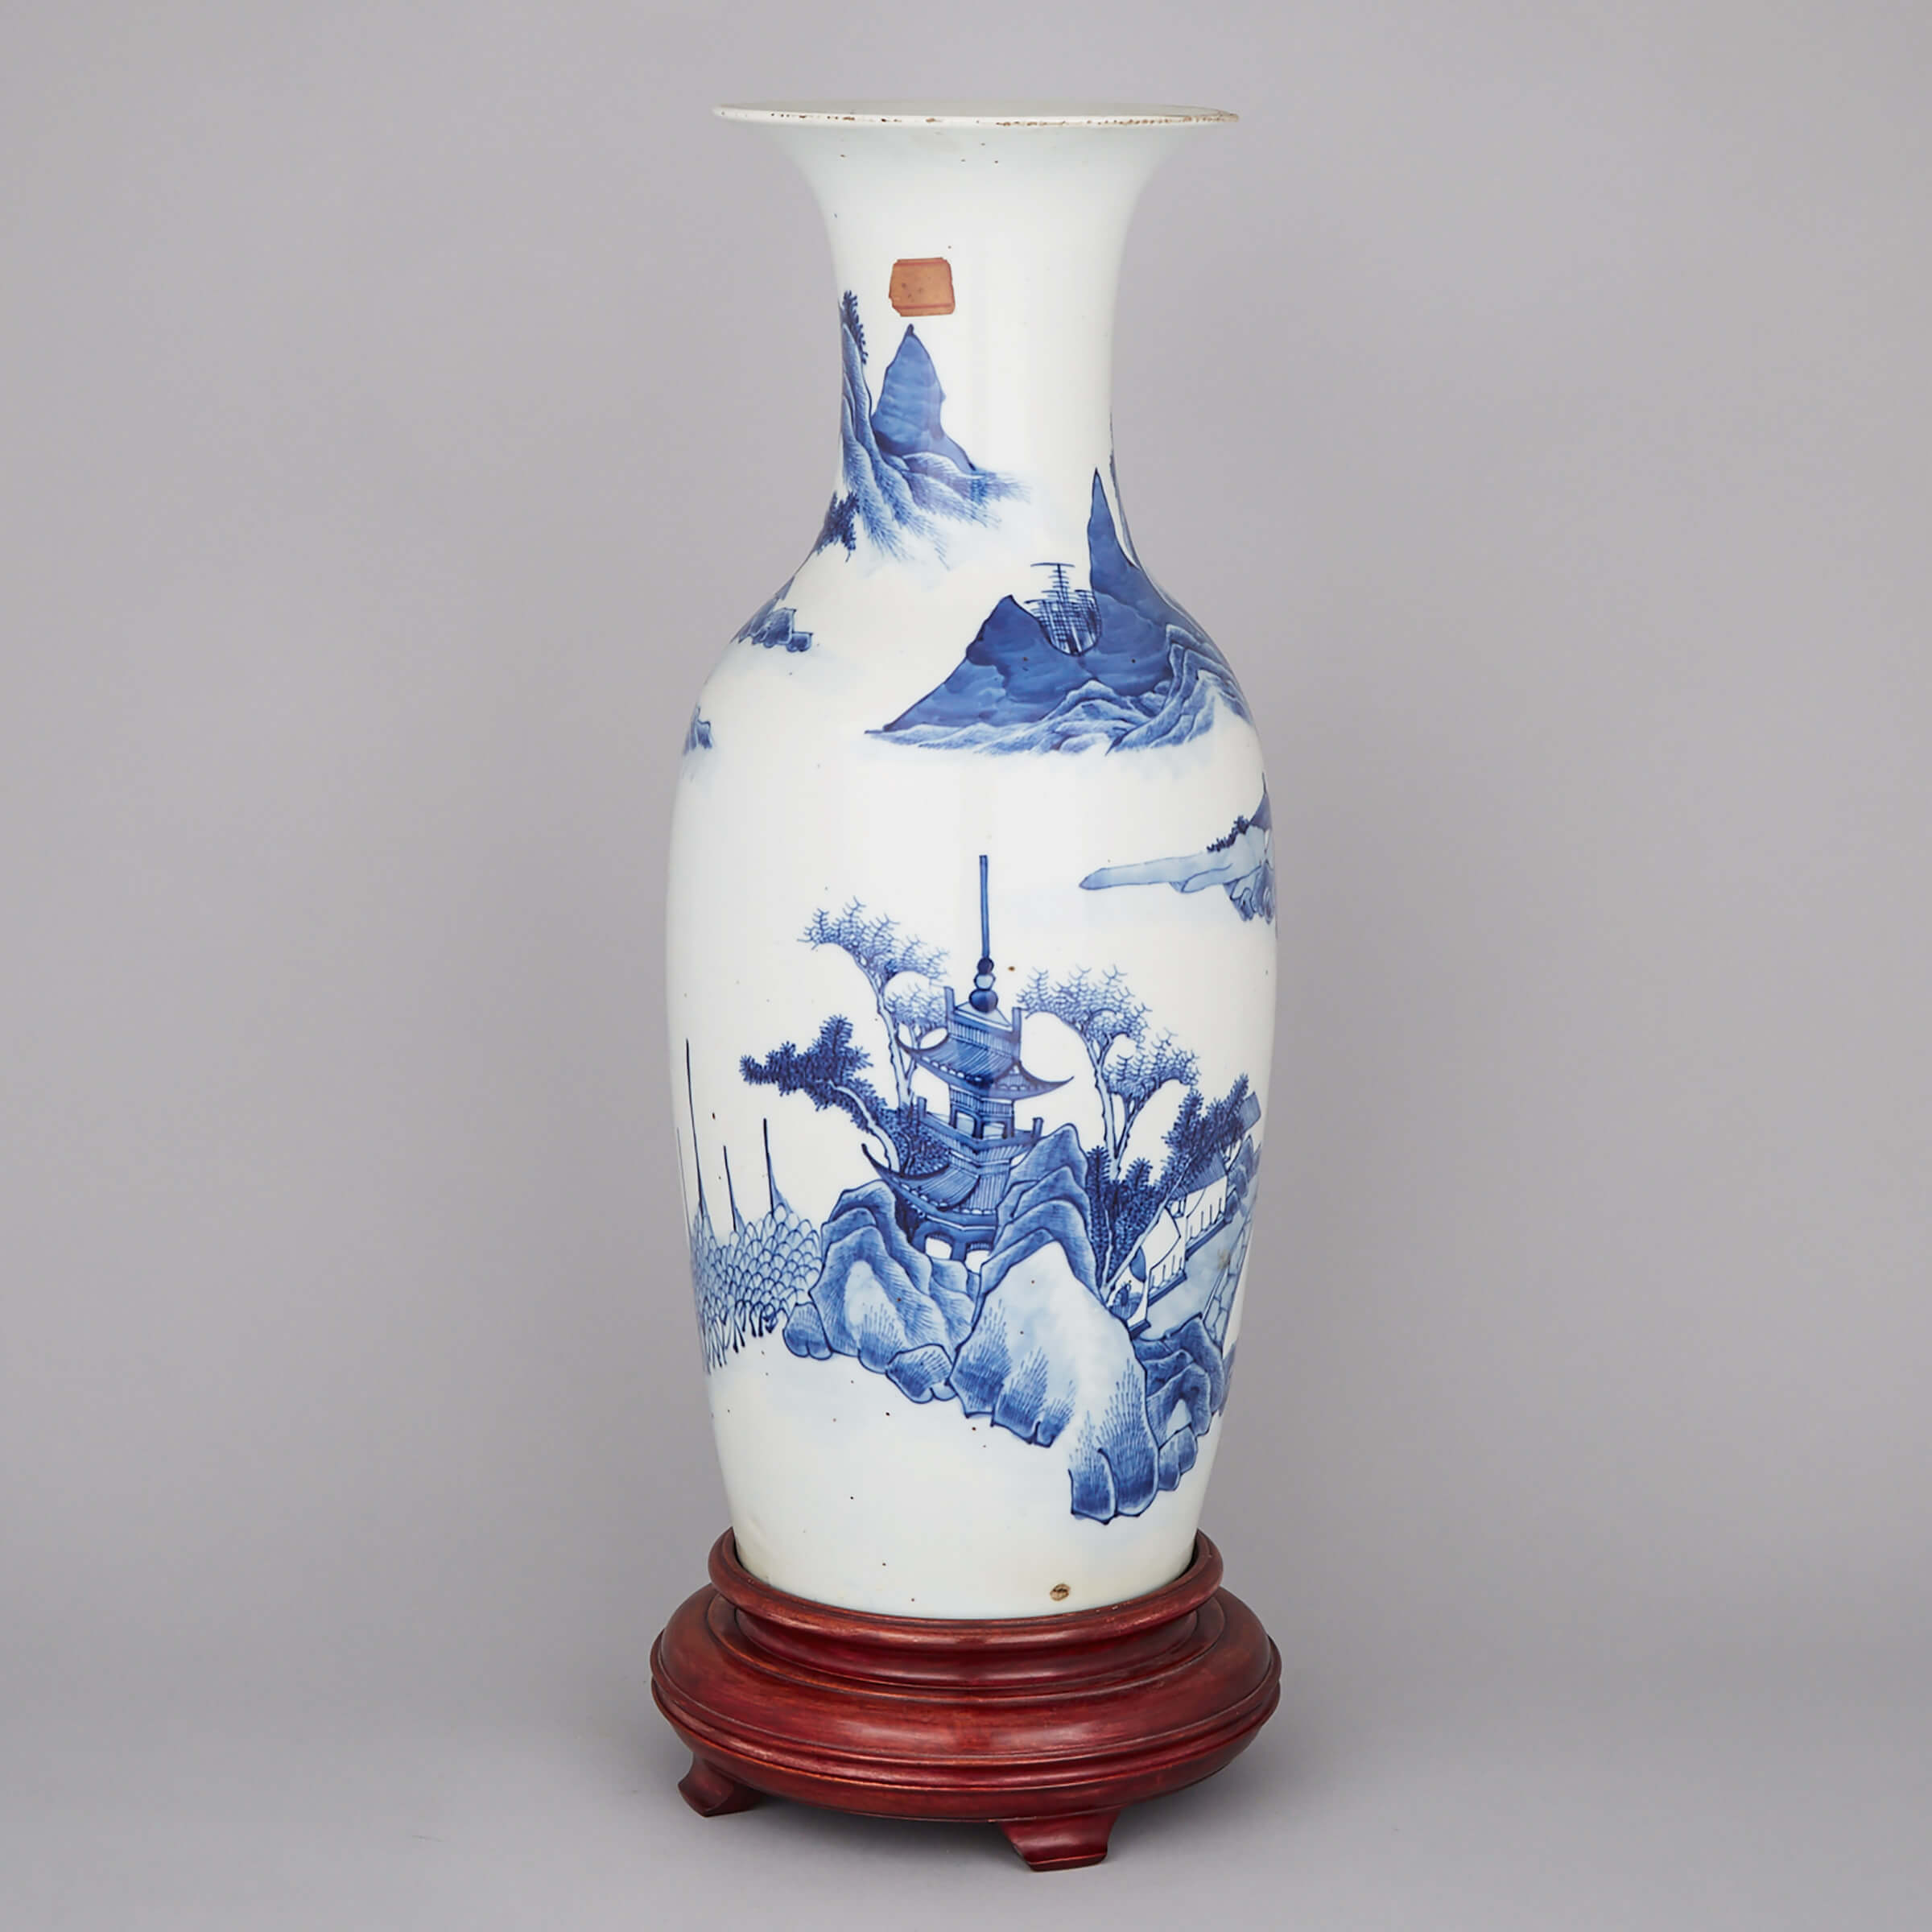 A Large Blue and White Landscape Vase